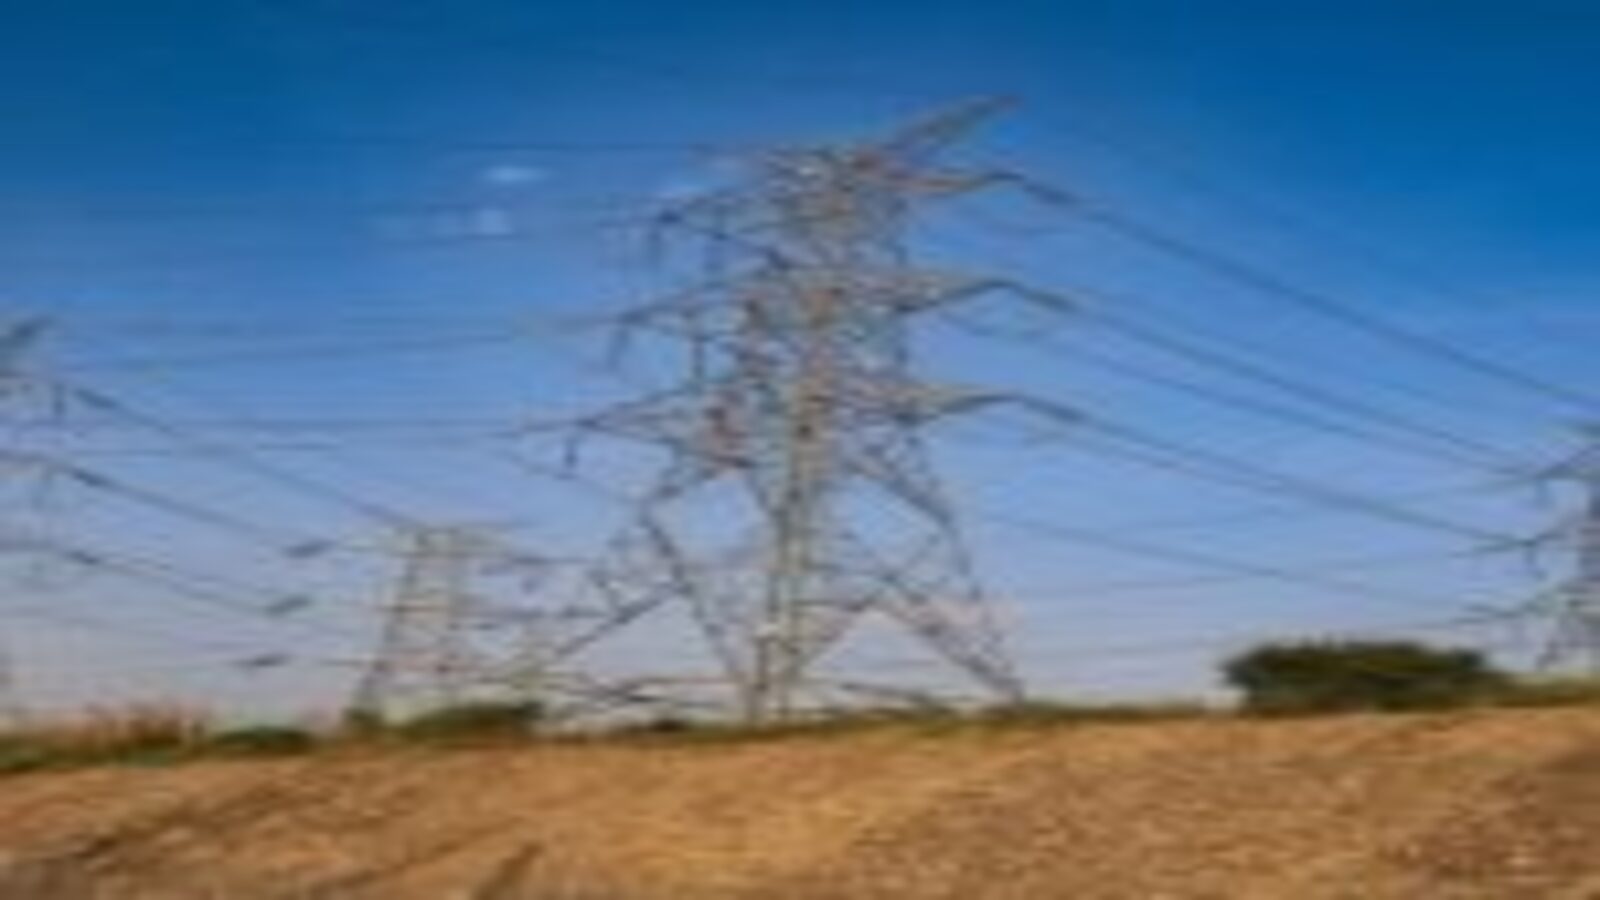 Electricity-power-lines-750x500-1-150x150_1600x900